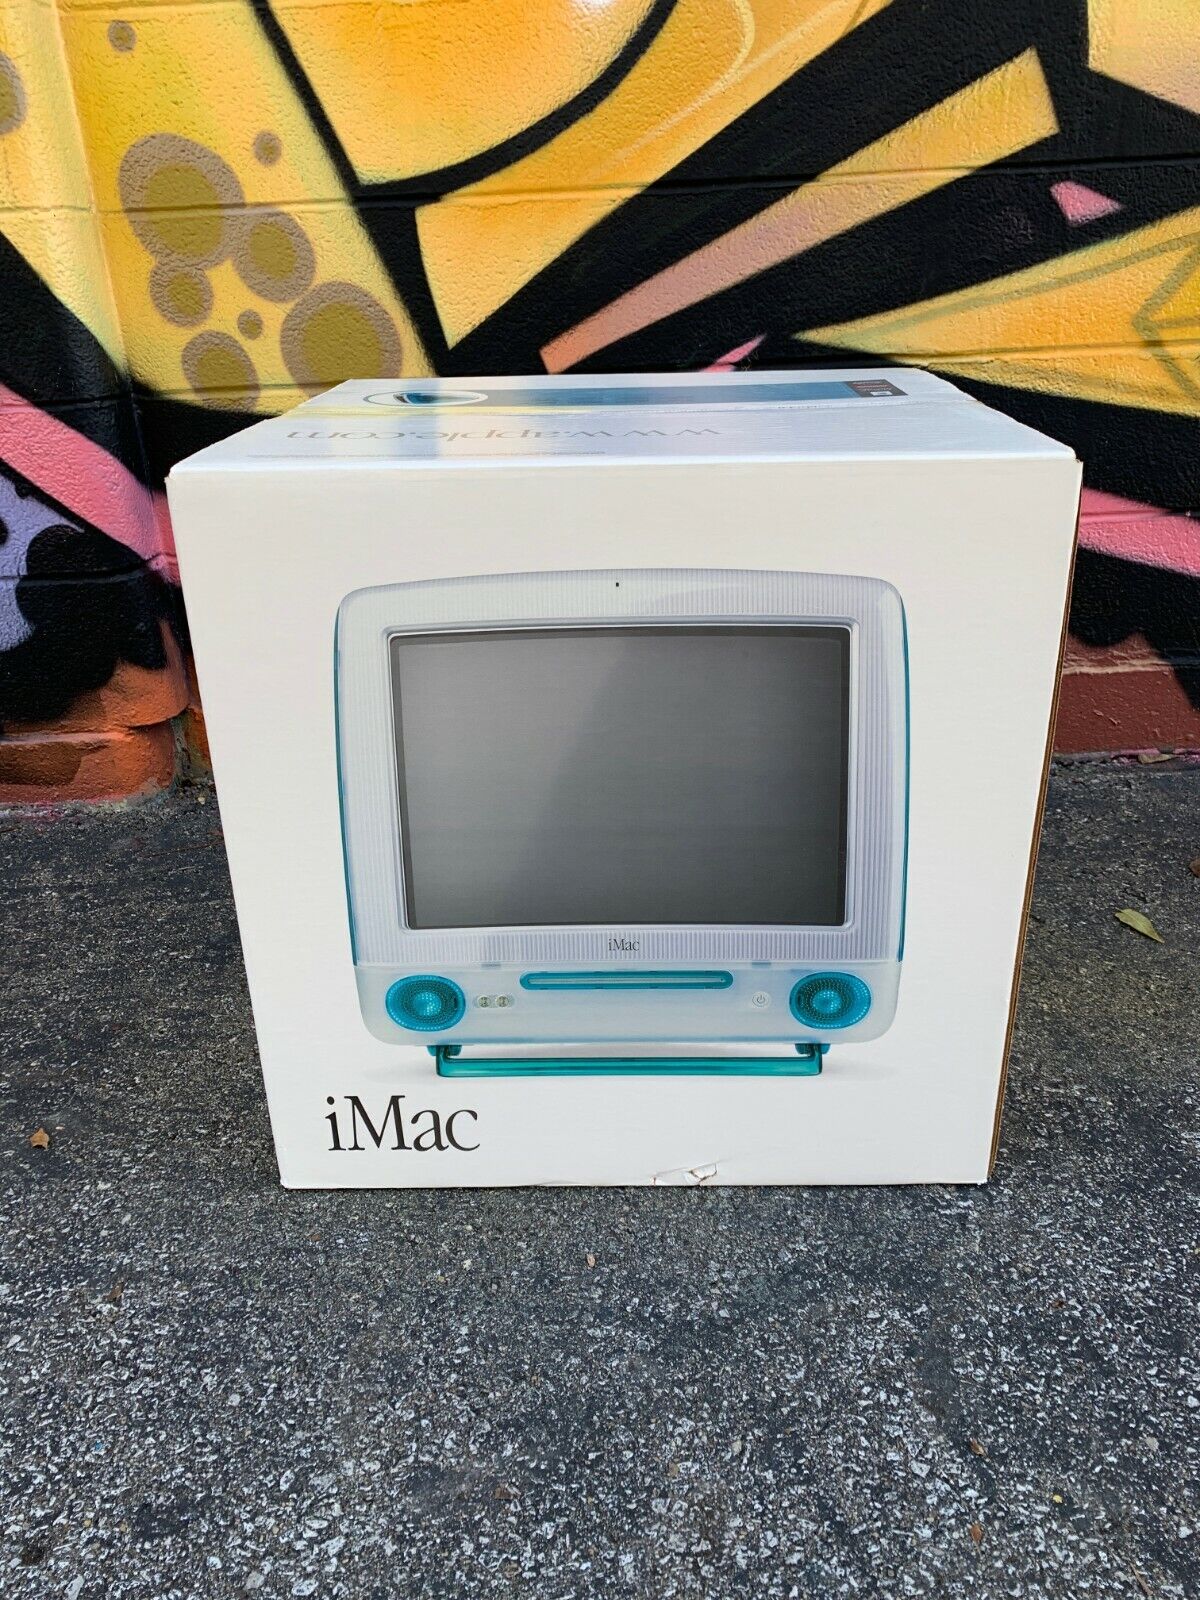 BRAND NEW - FACTORY SEALED - Vintage Apple iMac G3 Blueberry 350 MHZ - 128 MB